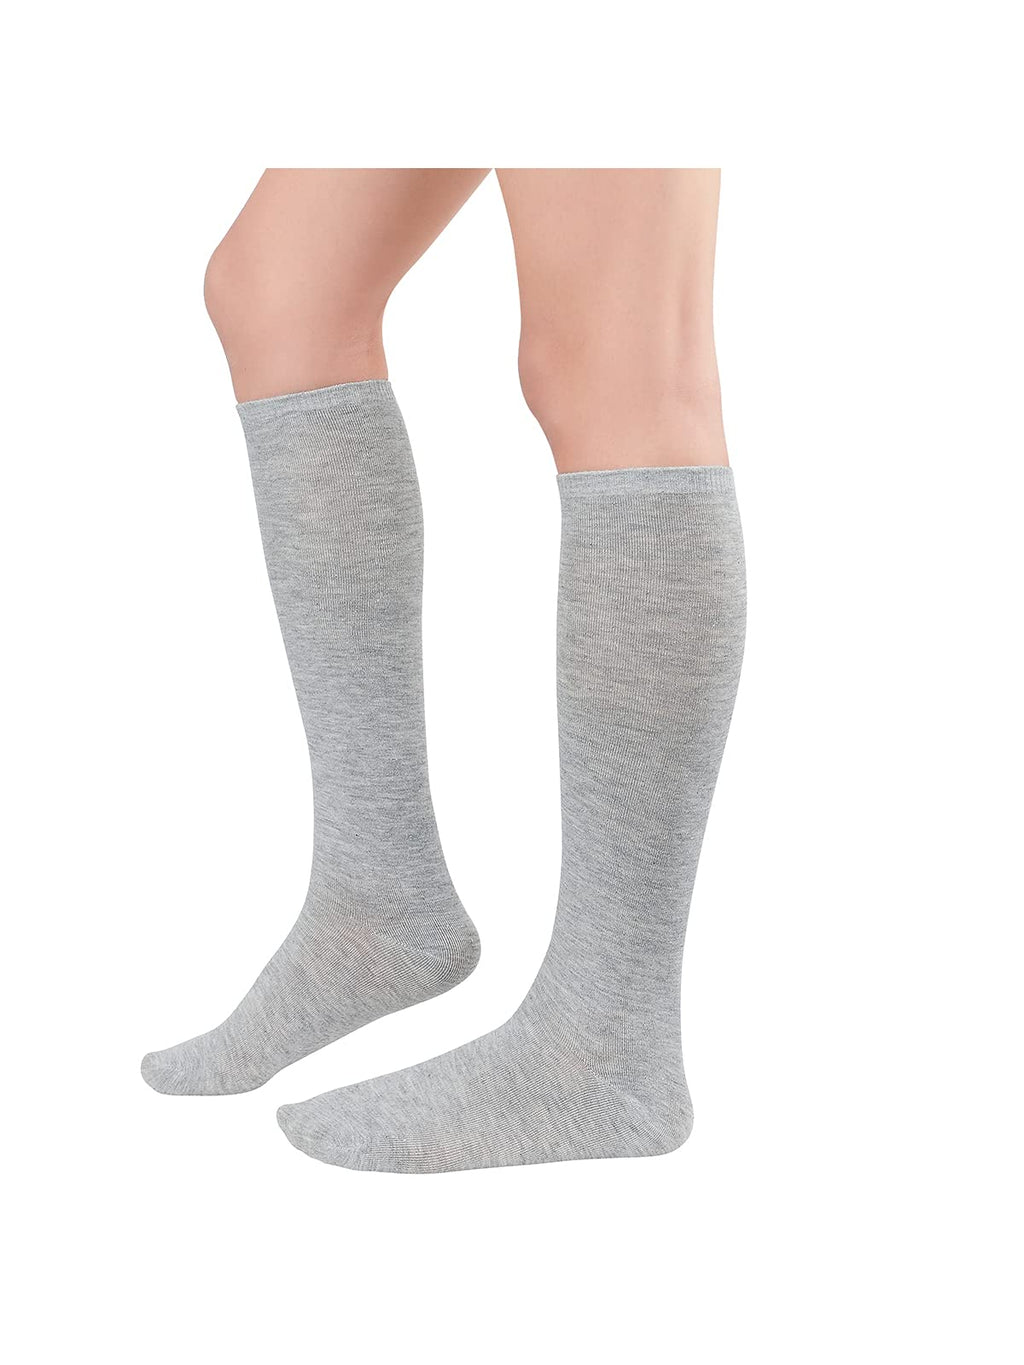 Century Star Women's Knee High Socks Athletic Thin Stripes Tube Socks High Stockings Outdoor Sport Socks One Size 1 Pack Grey - BeesActive Australia